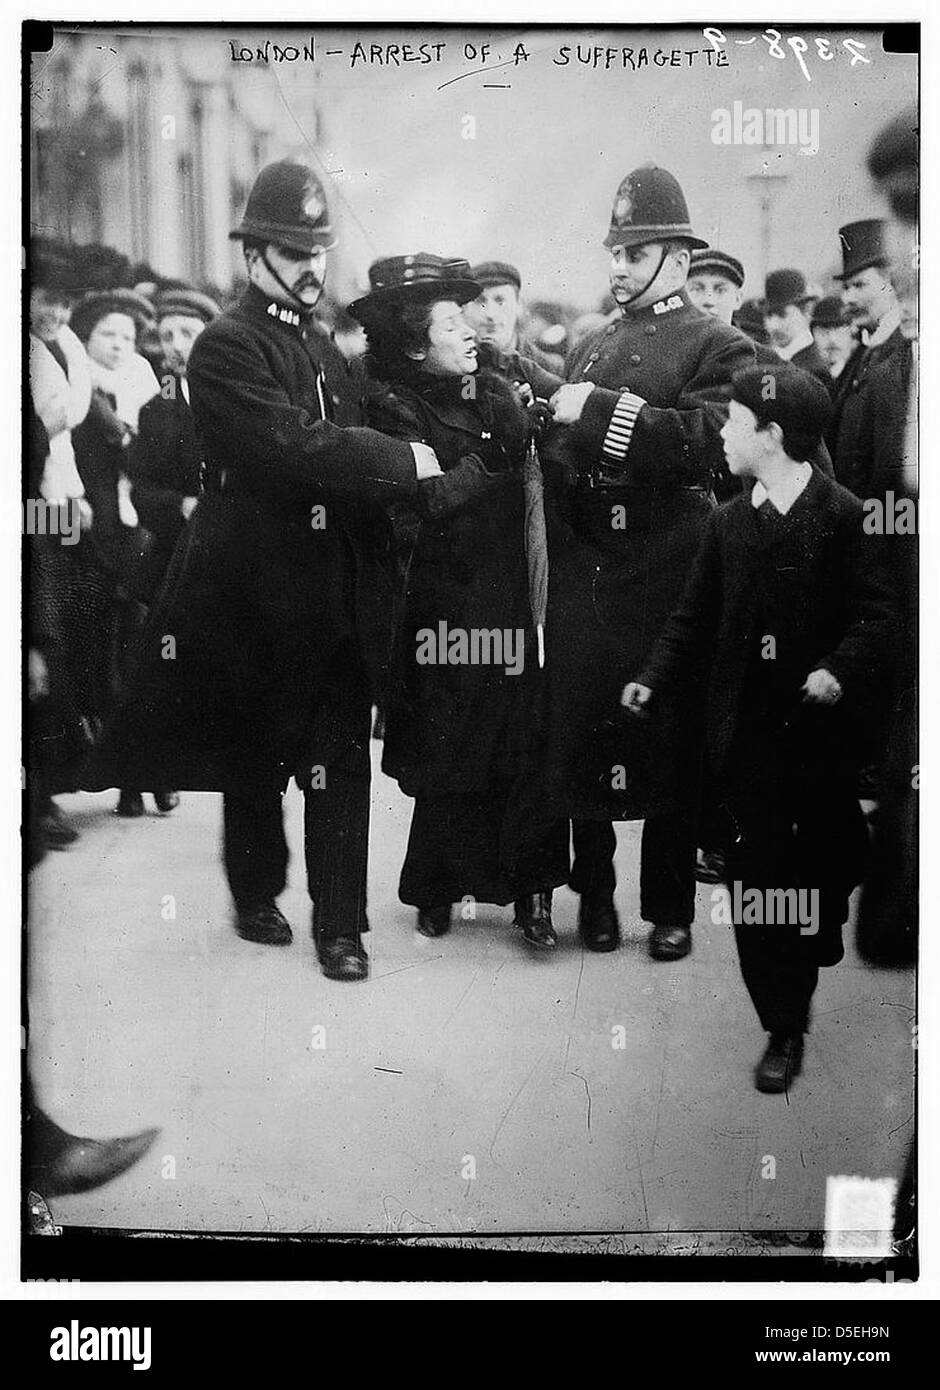 London - arrest of a suffragette (LOC) Stock Photo